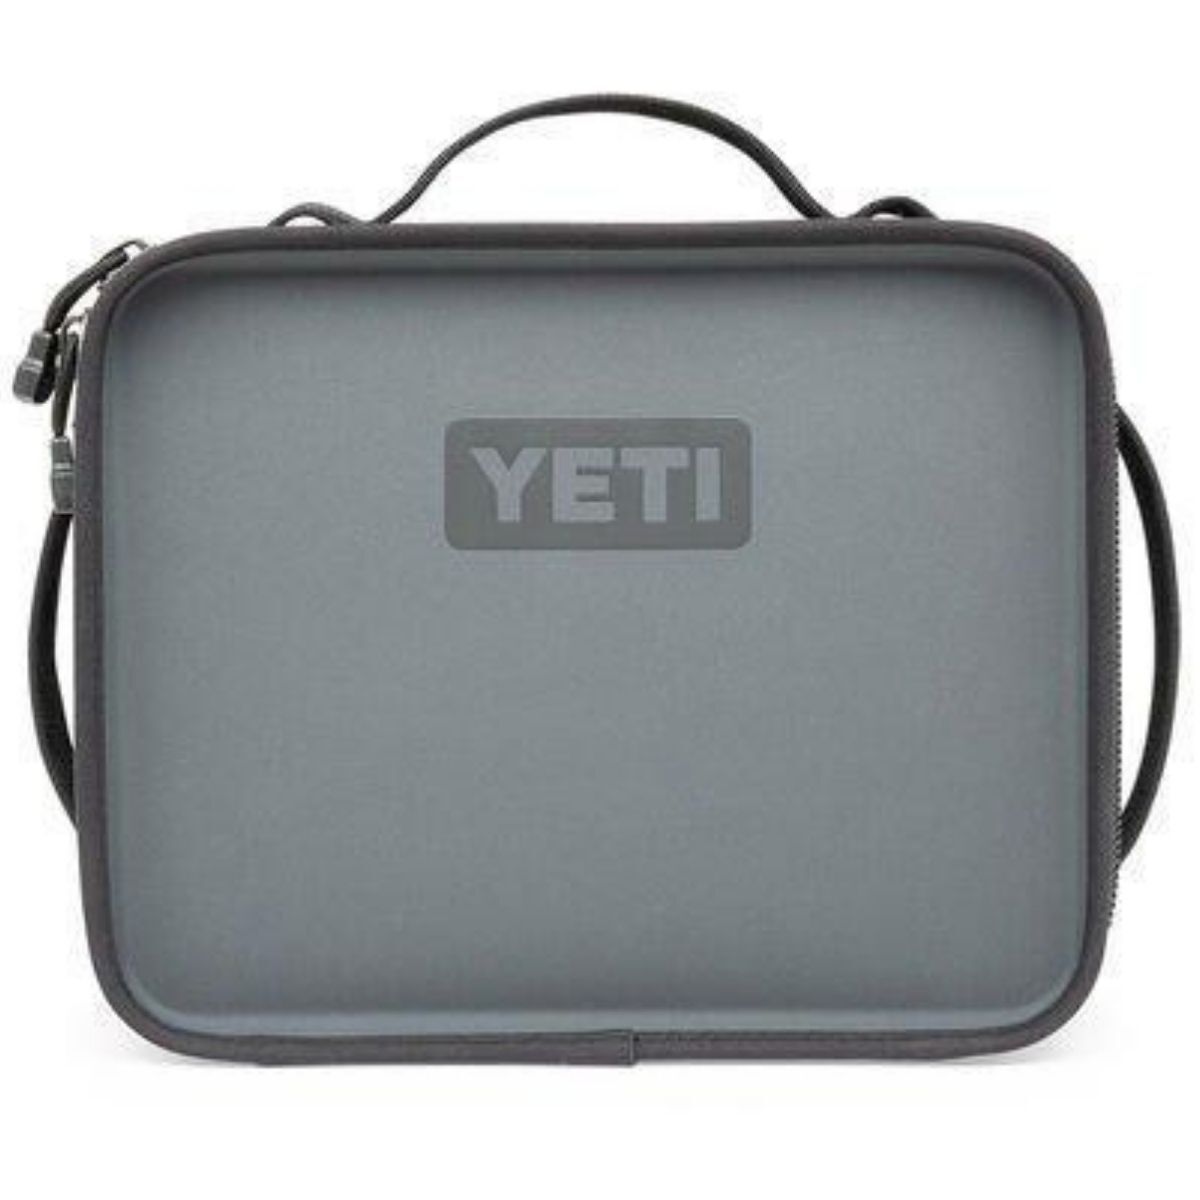 Yeti Daytrip Lunch Box - Food Canister